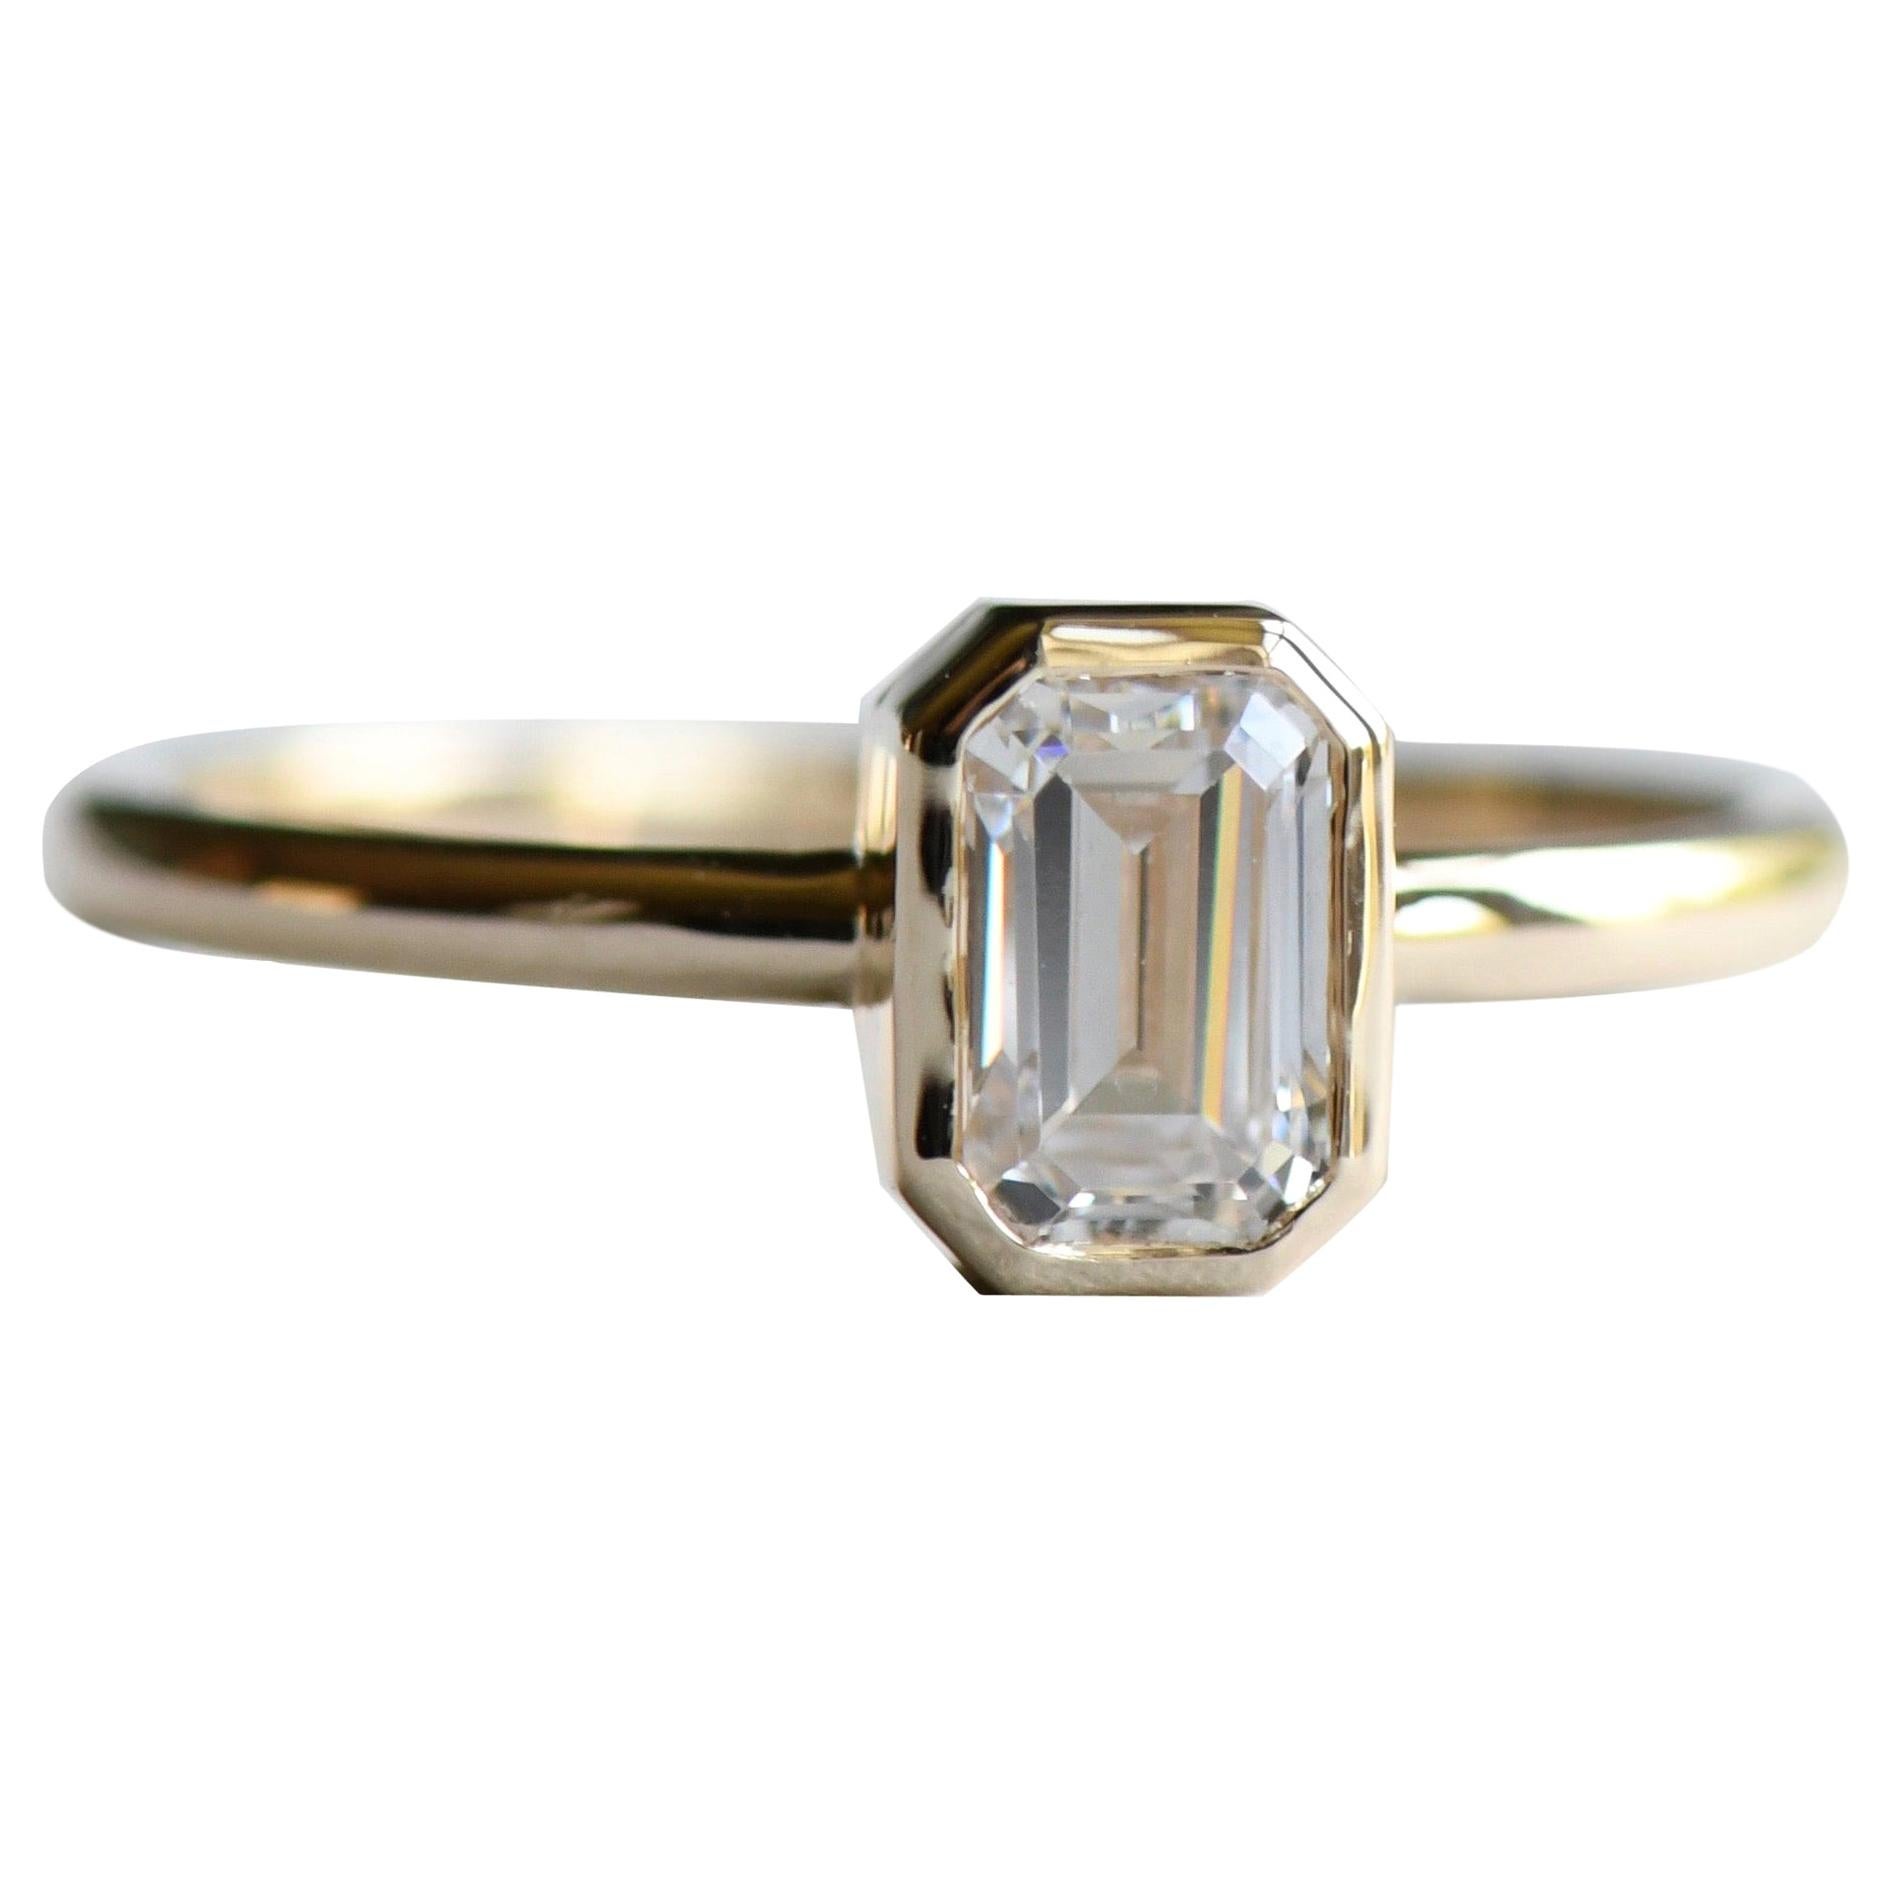 14 Karat Gold mit 0,5 Karat Diamant im Smaragdschliff Solitär-Ring, Verlobungsring